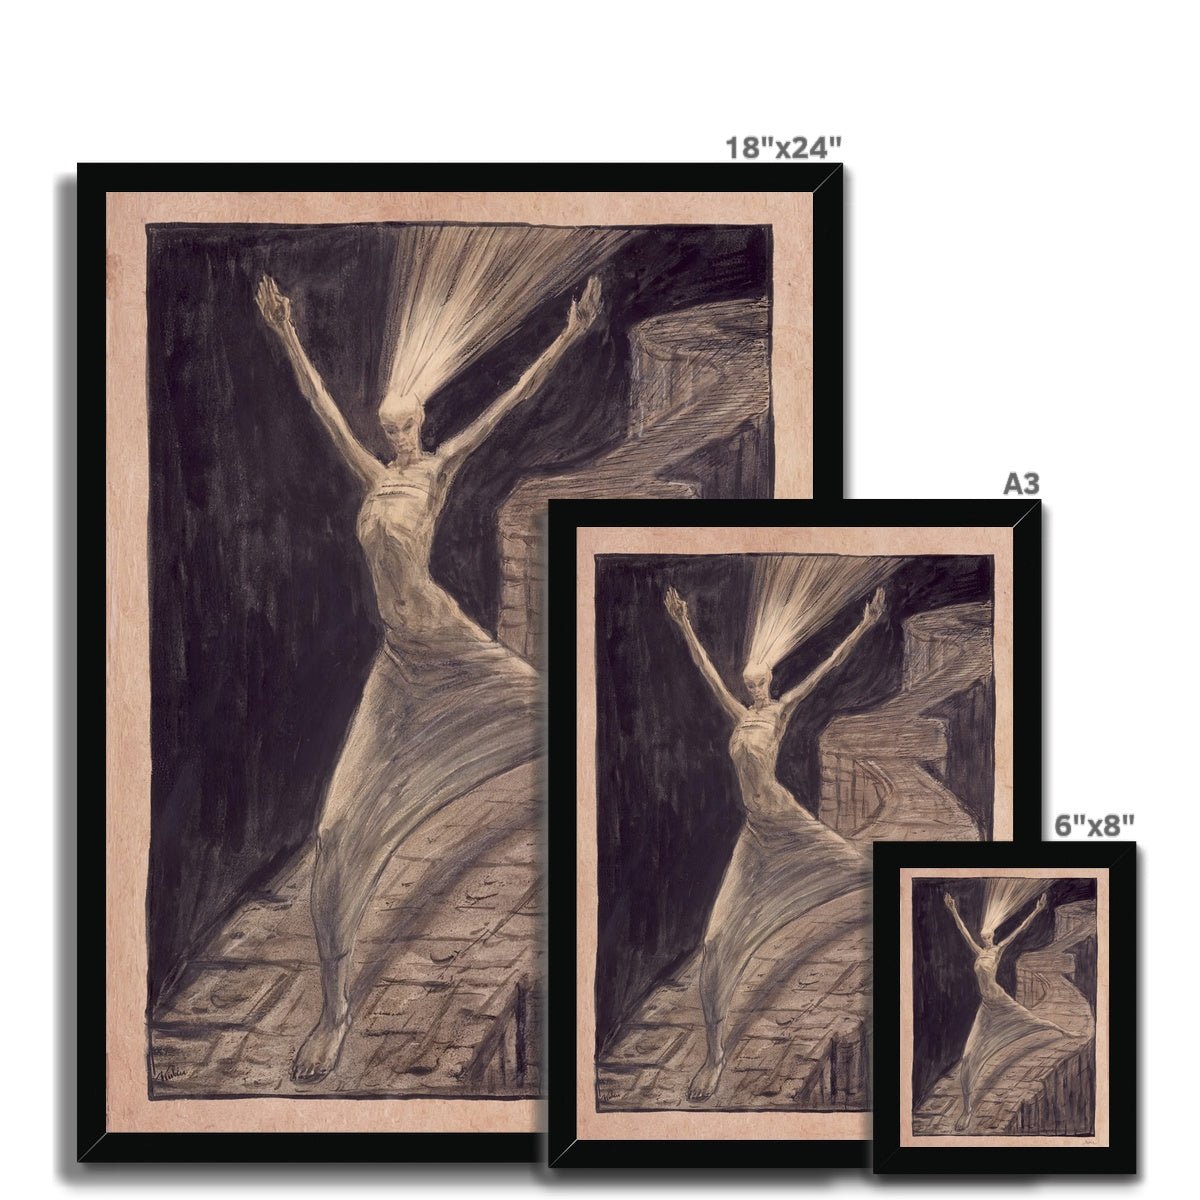 Framed Print Alfred Kubin: God of Light | Antique Symbolist Surrealist | Gothic Home Decor | Dark Fantasy Occult Mystic Pagan Magick Framed Art Print